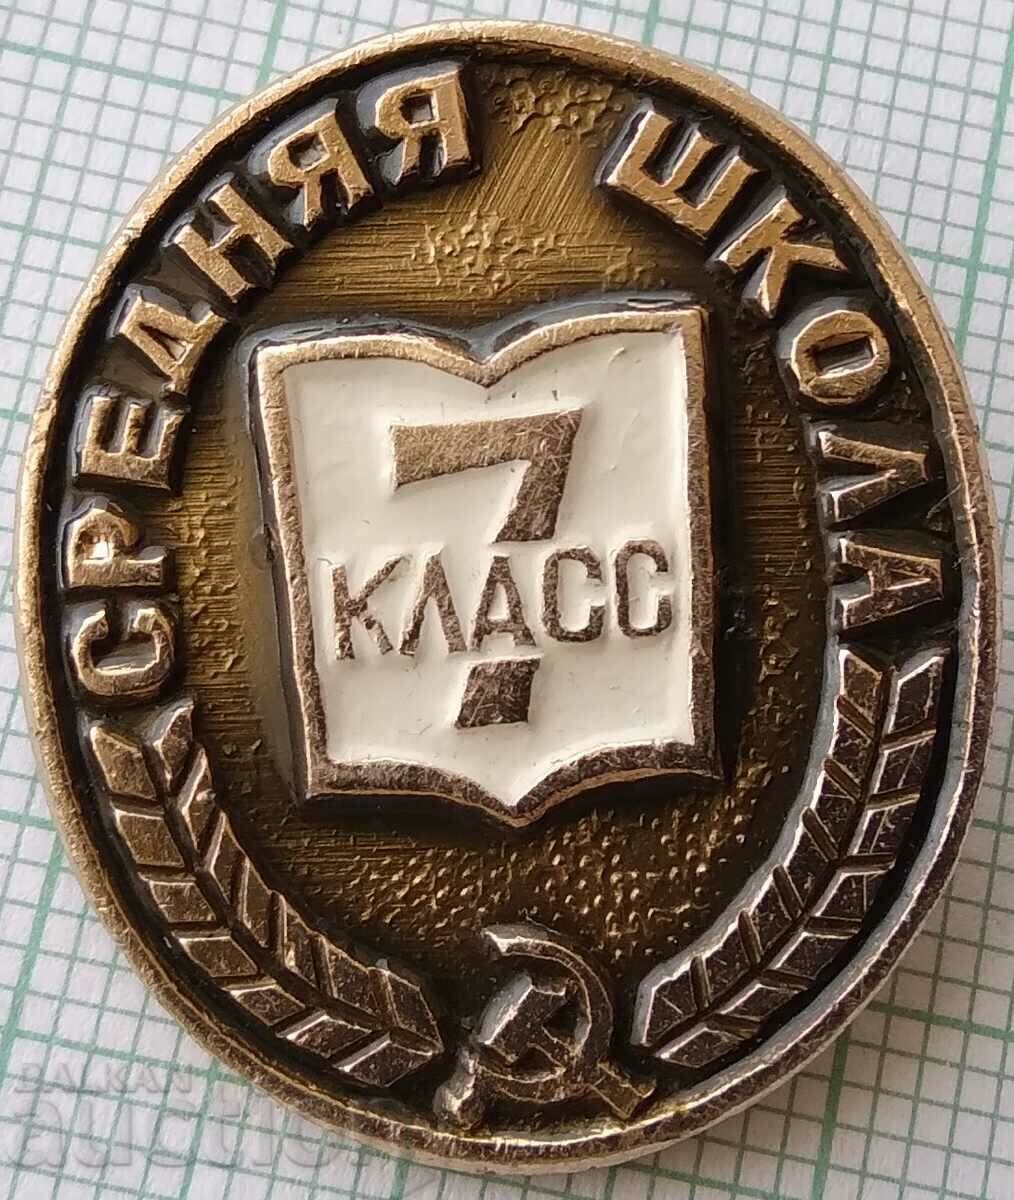 16277 Badge - Secondary school 7th grade USSR